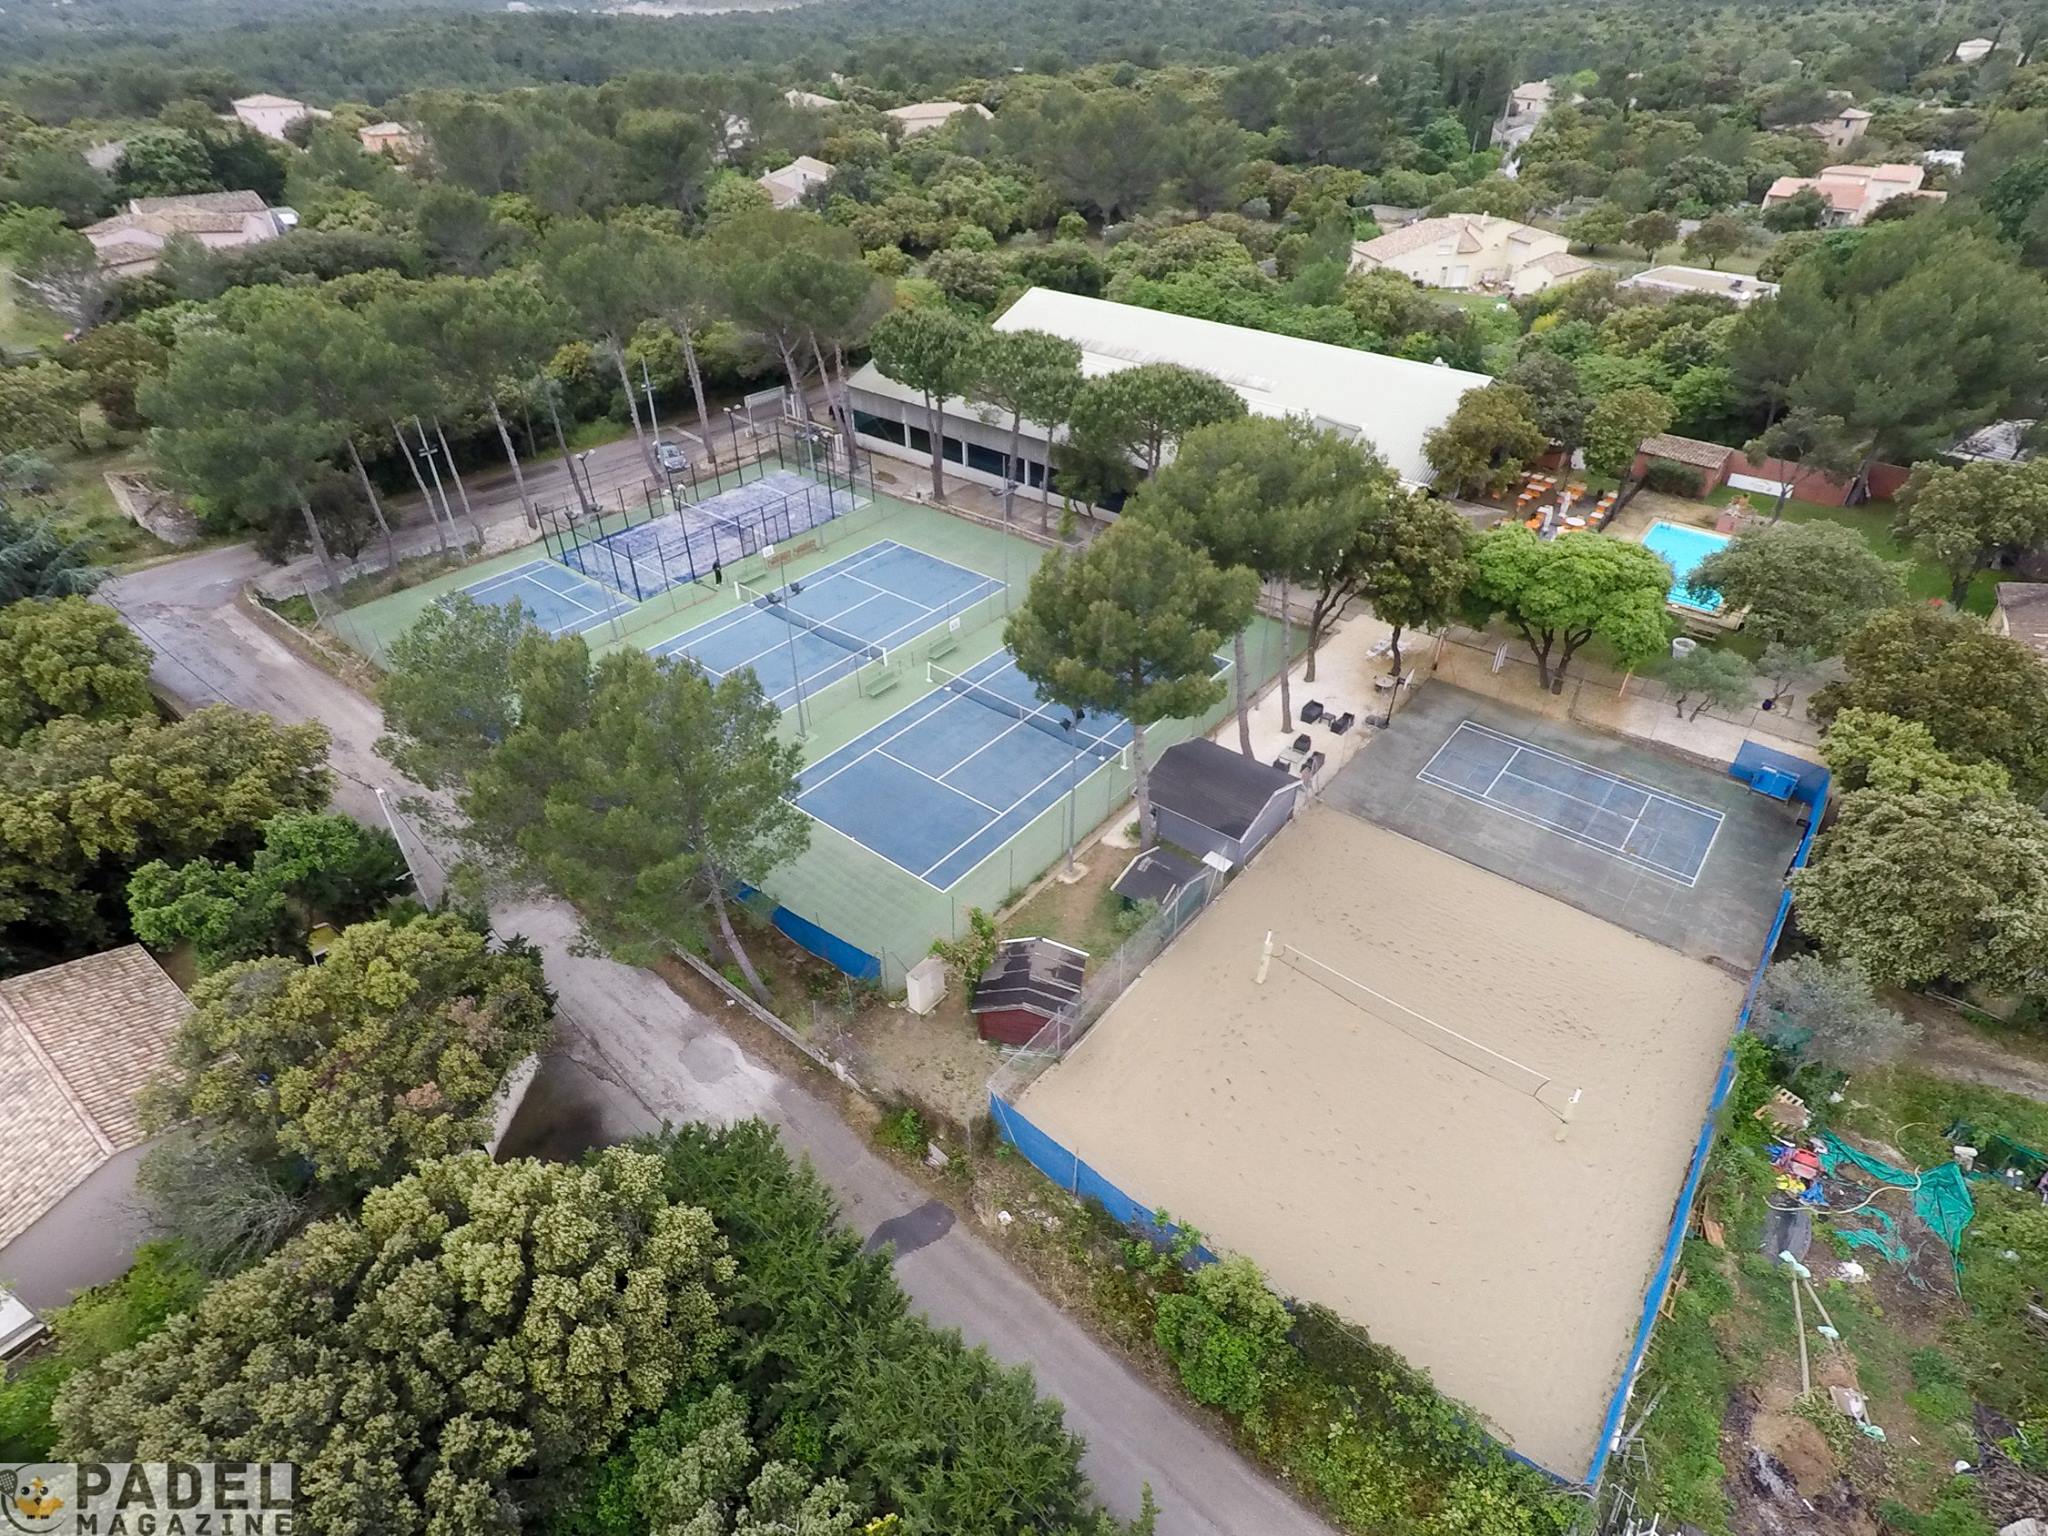 Nîmesin maa on padel at Tennis Forever